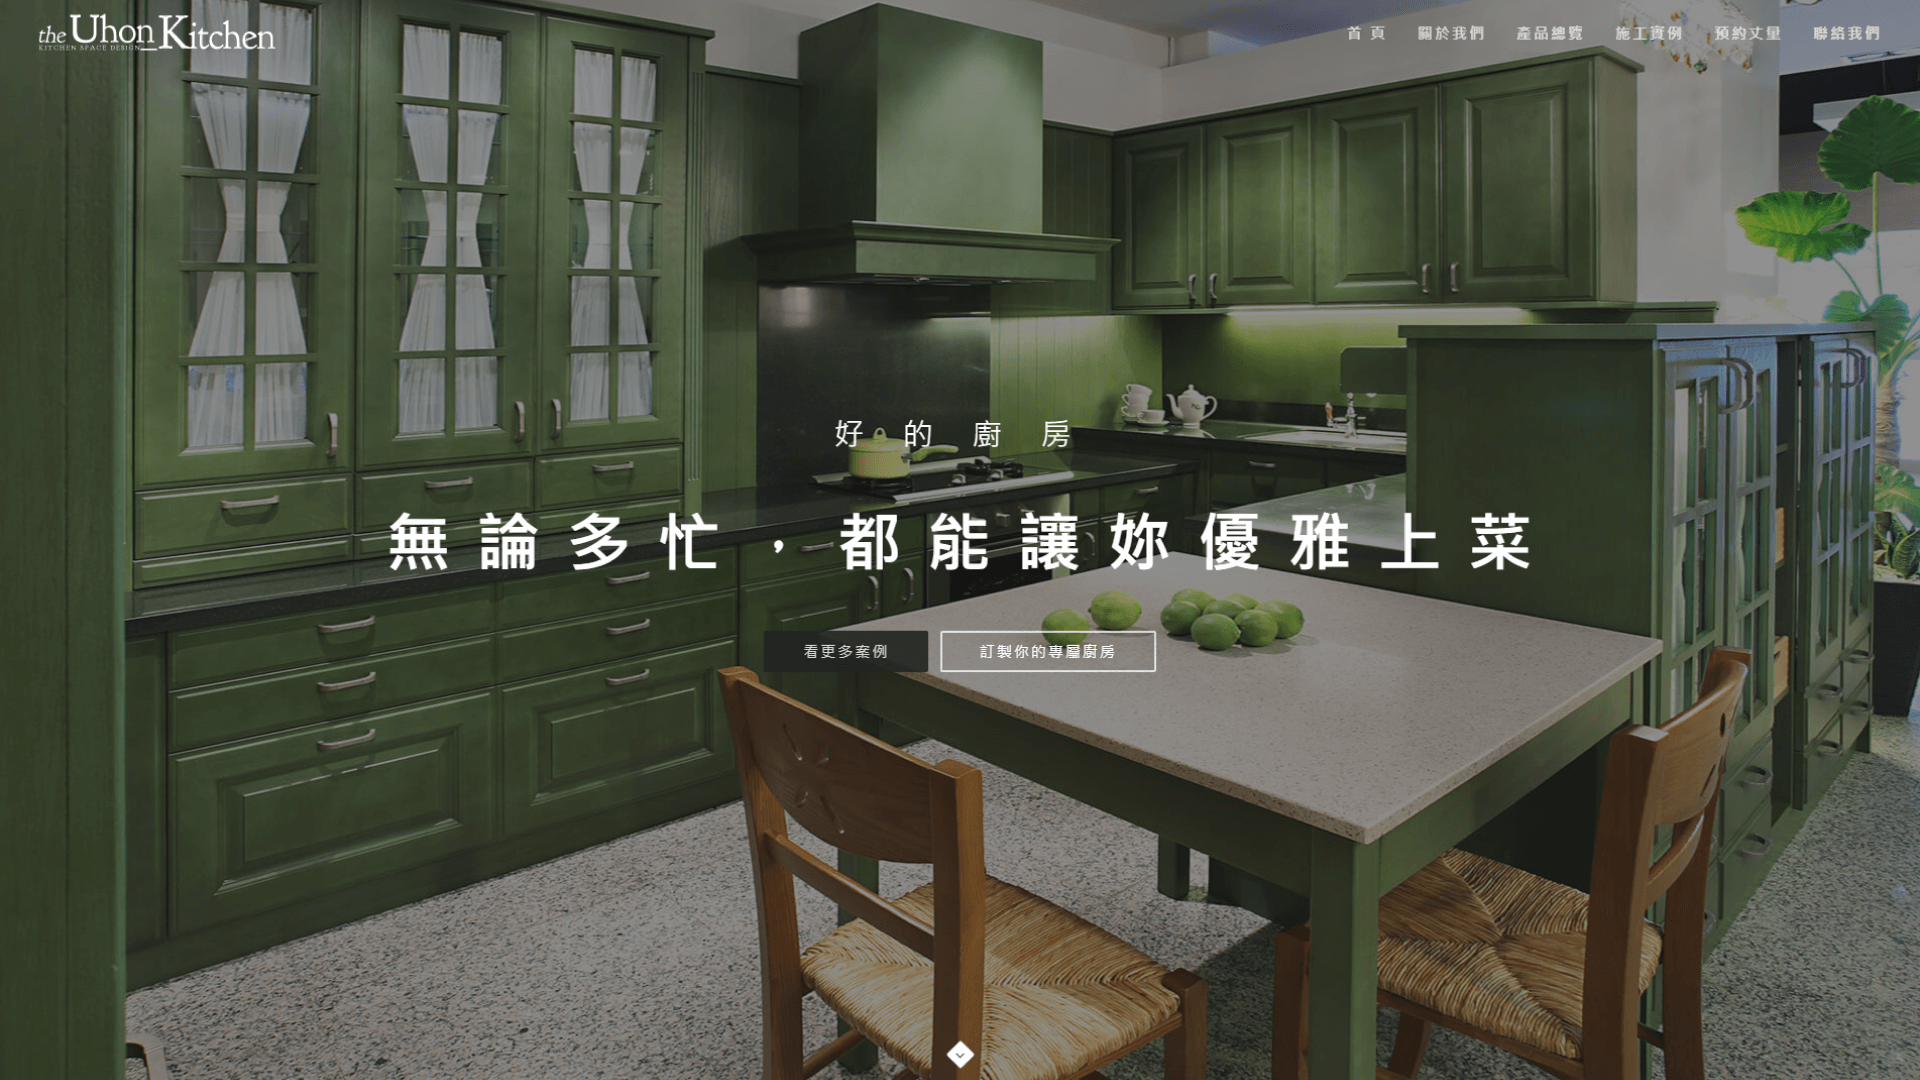 Web Design / 銢鴻 Uhon Kitchen